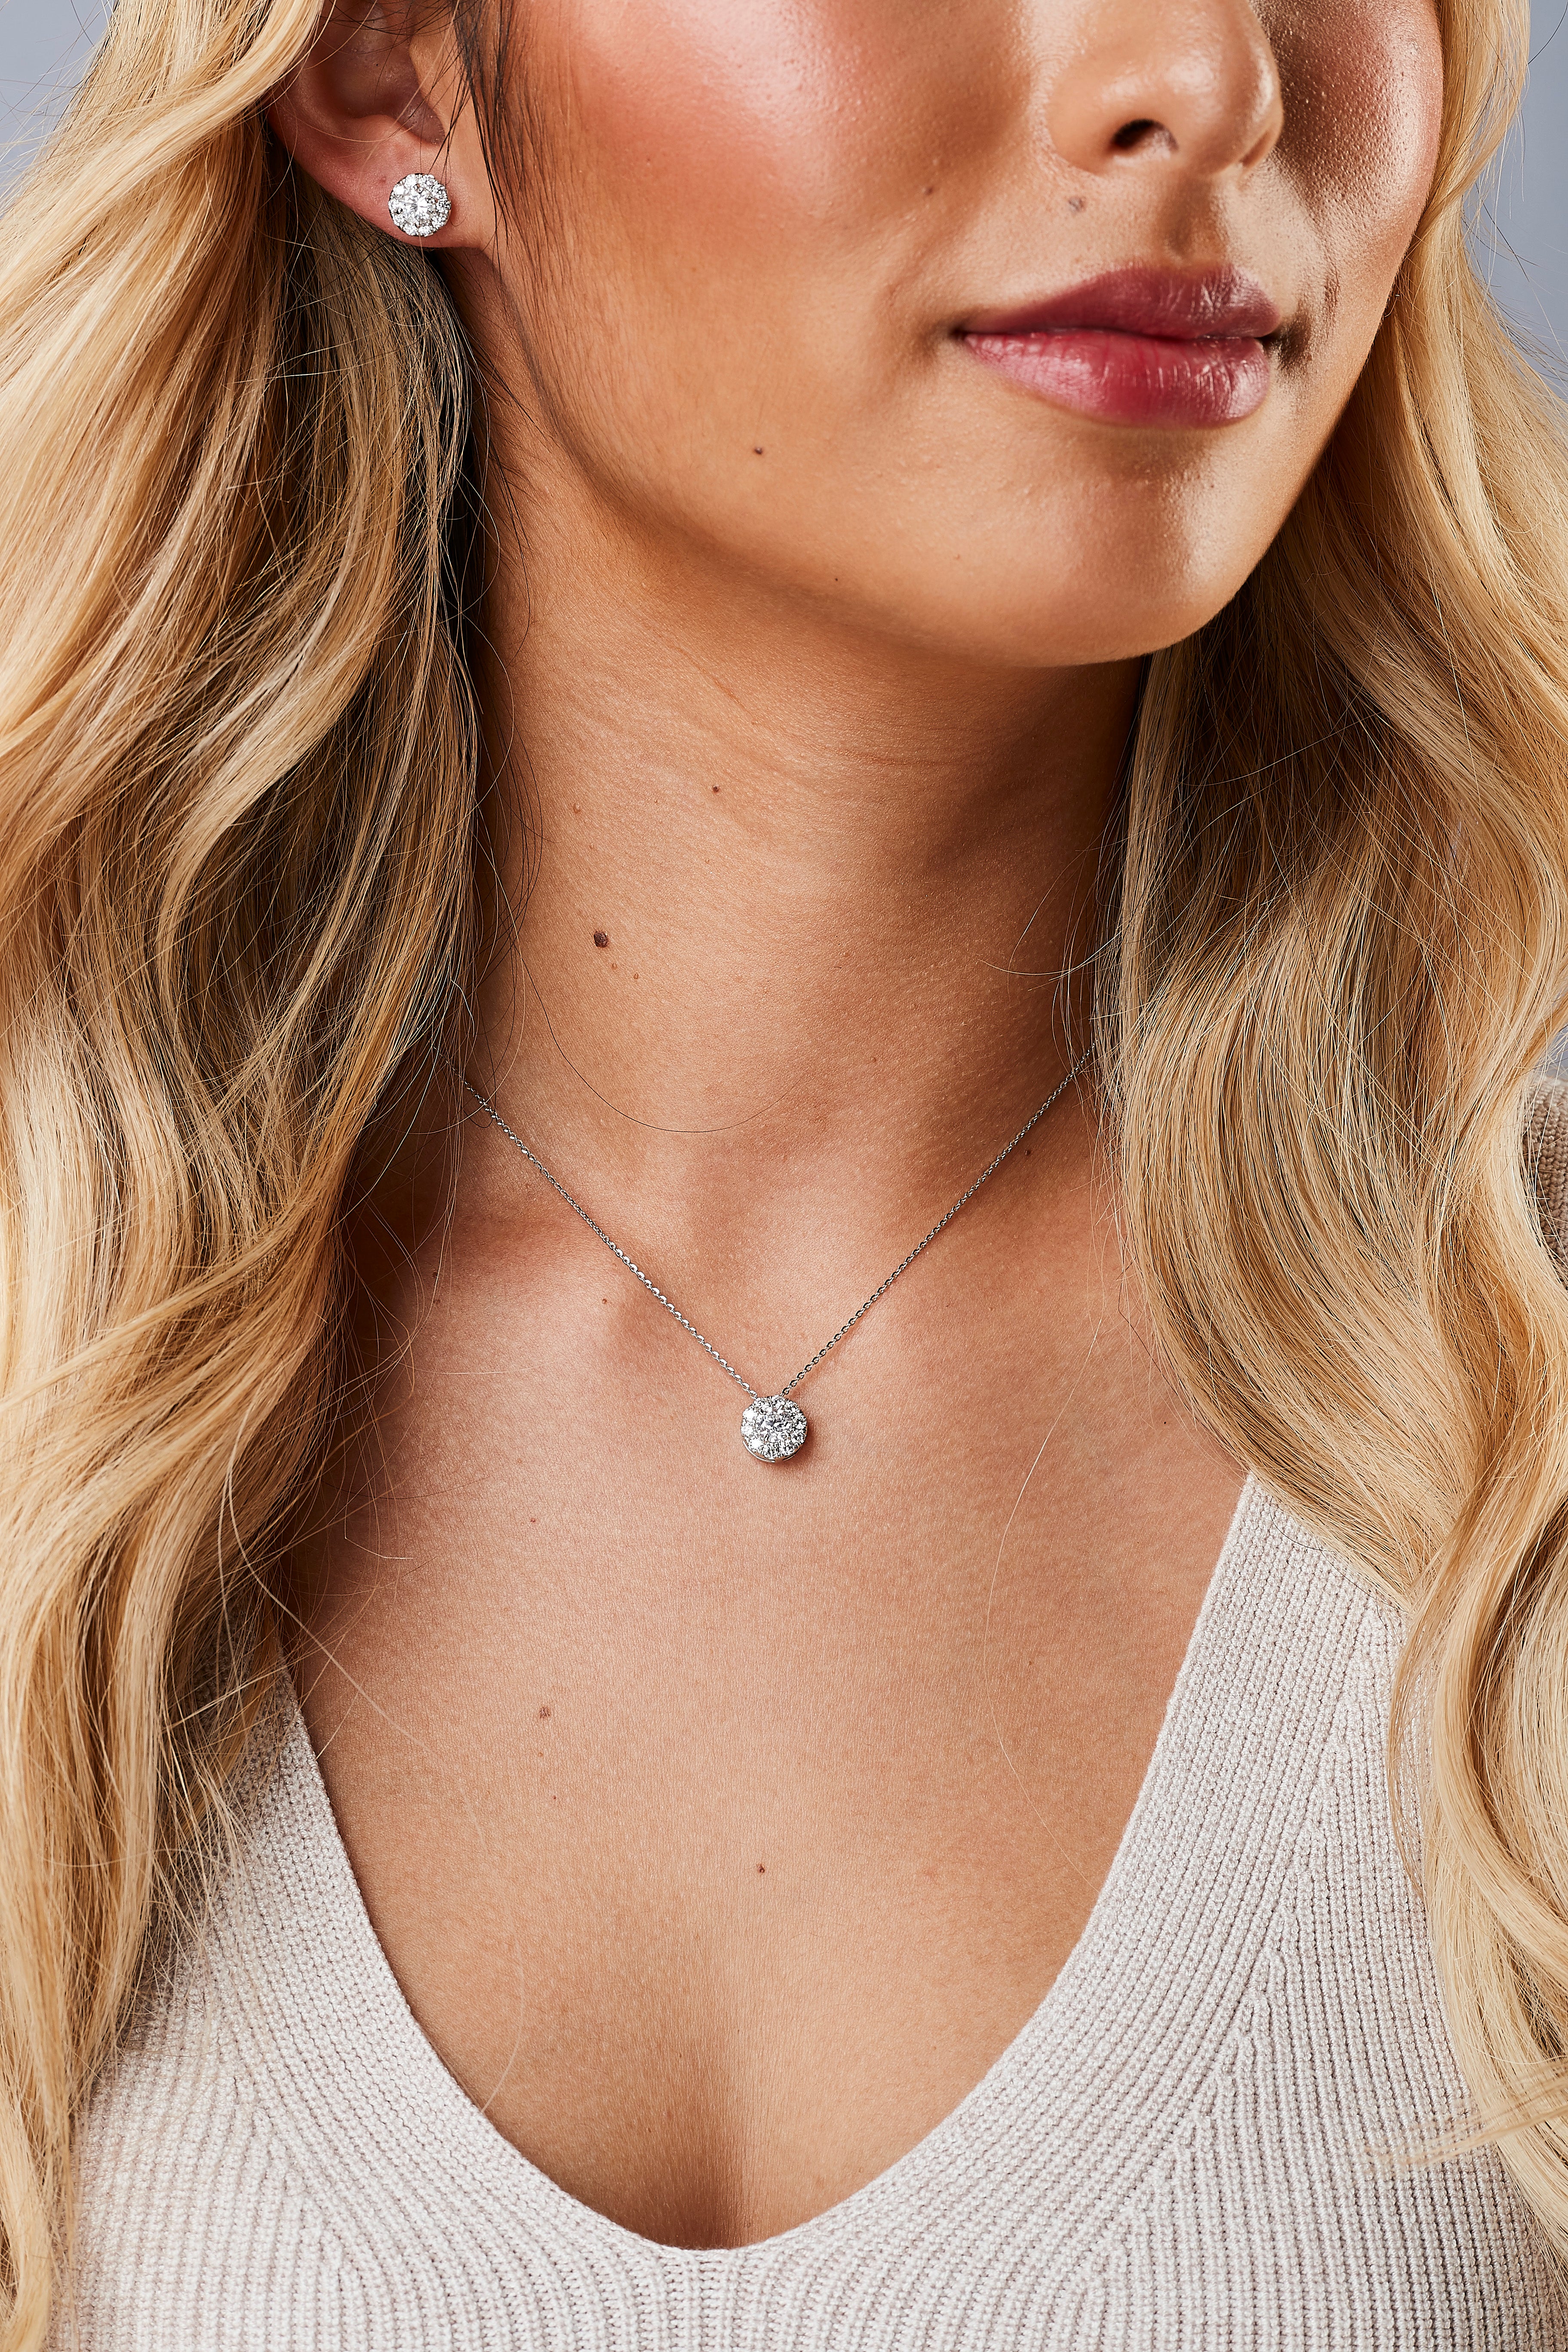 18ct White Gold Double Diamond Halo Necklace with 14ct Chain – BURLINGTON